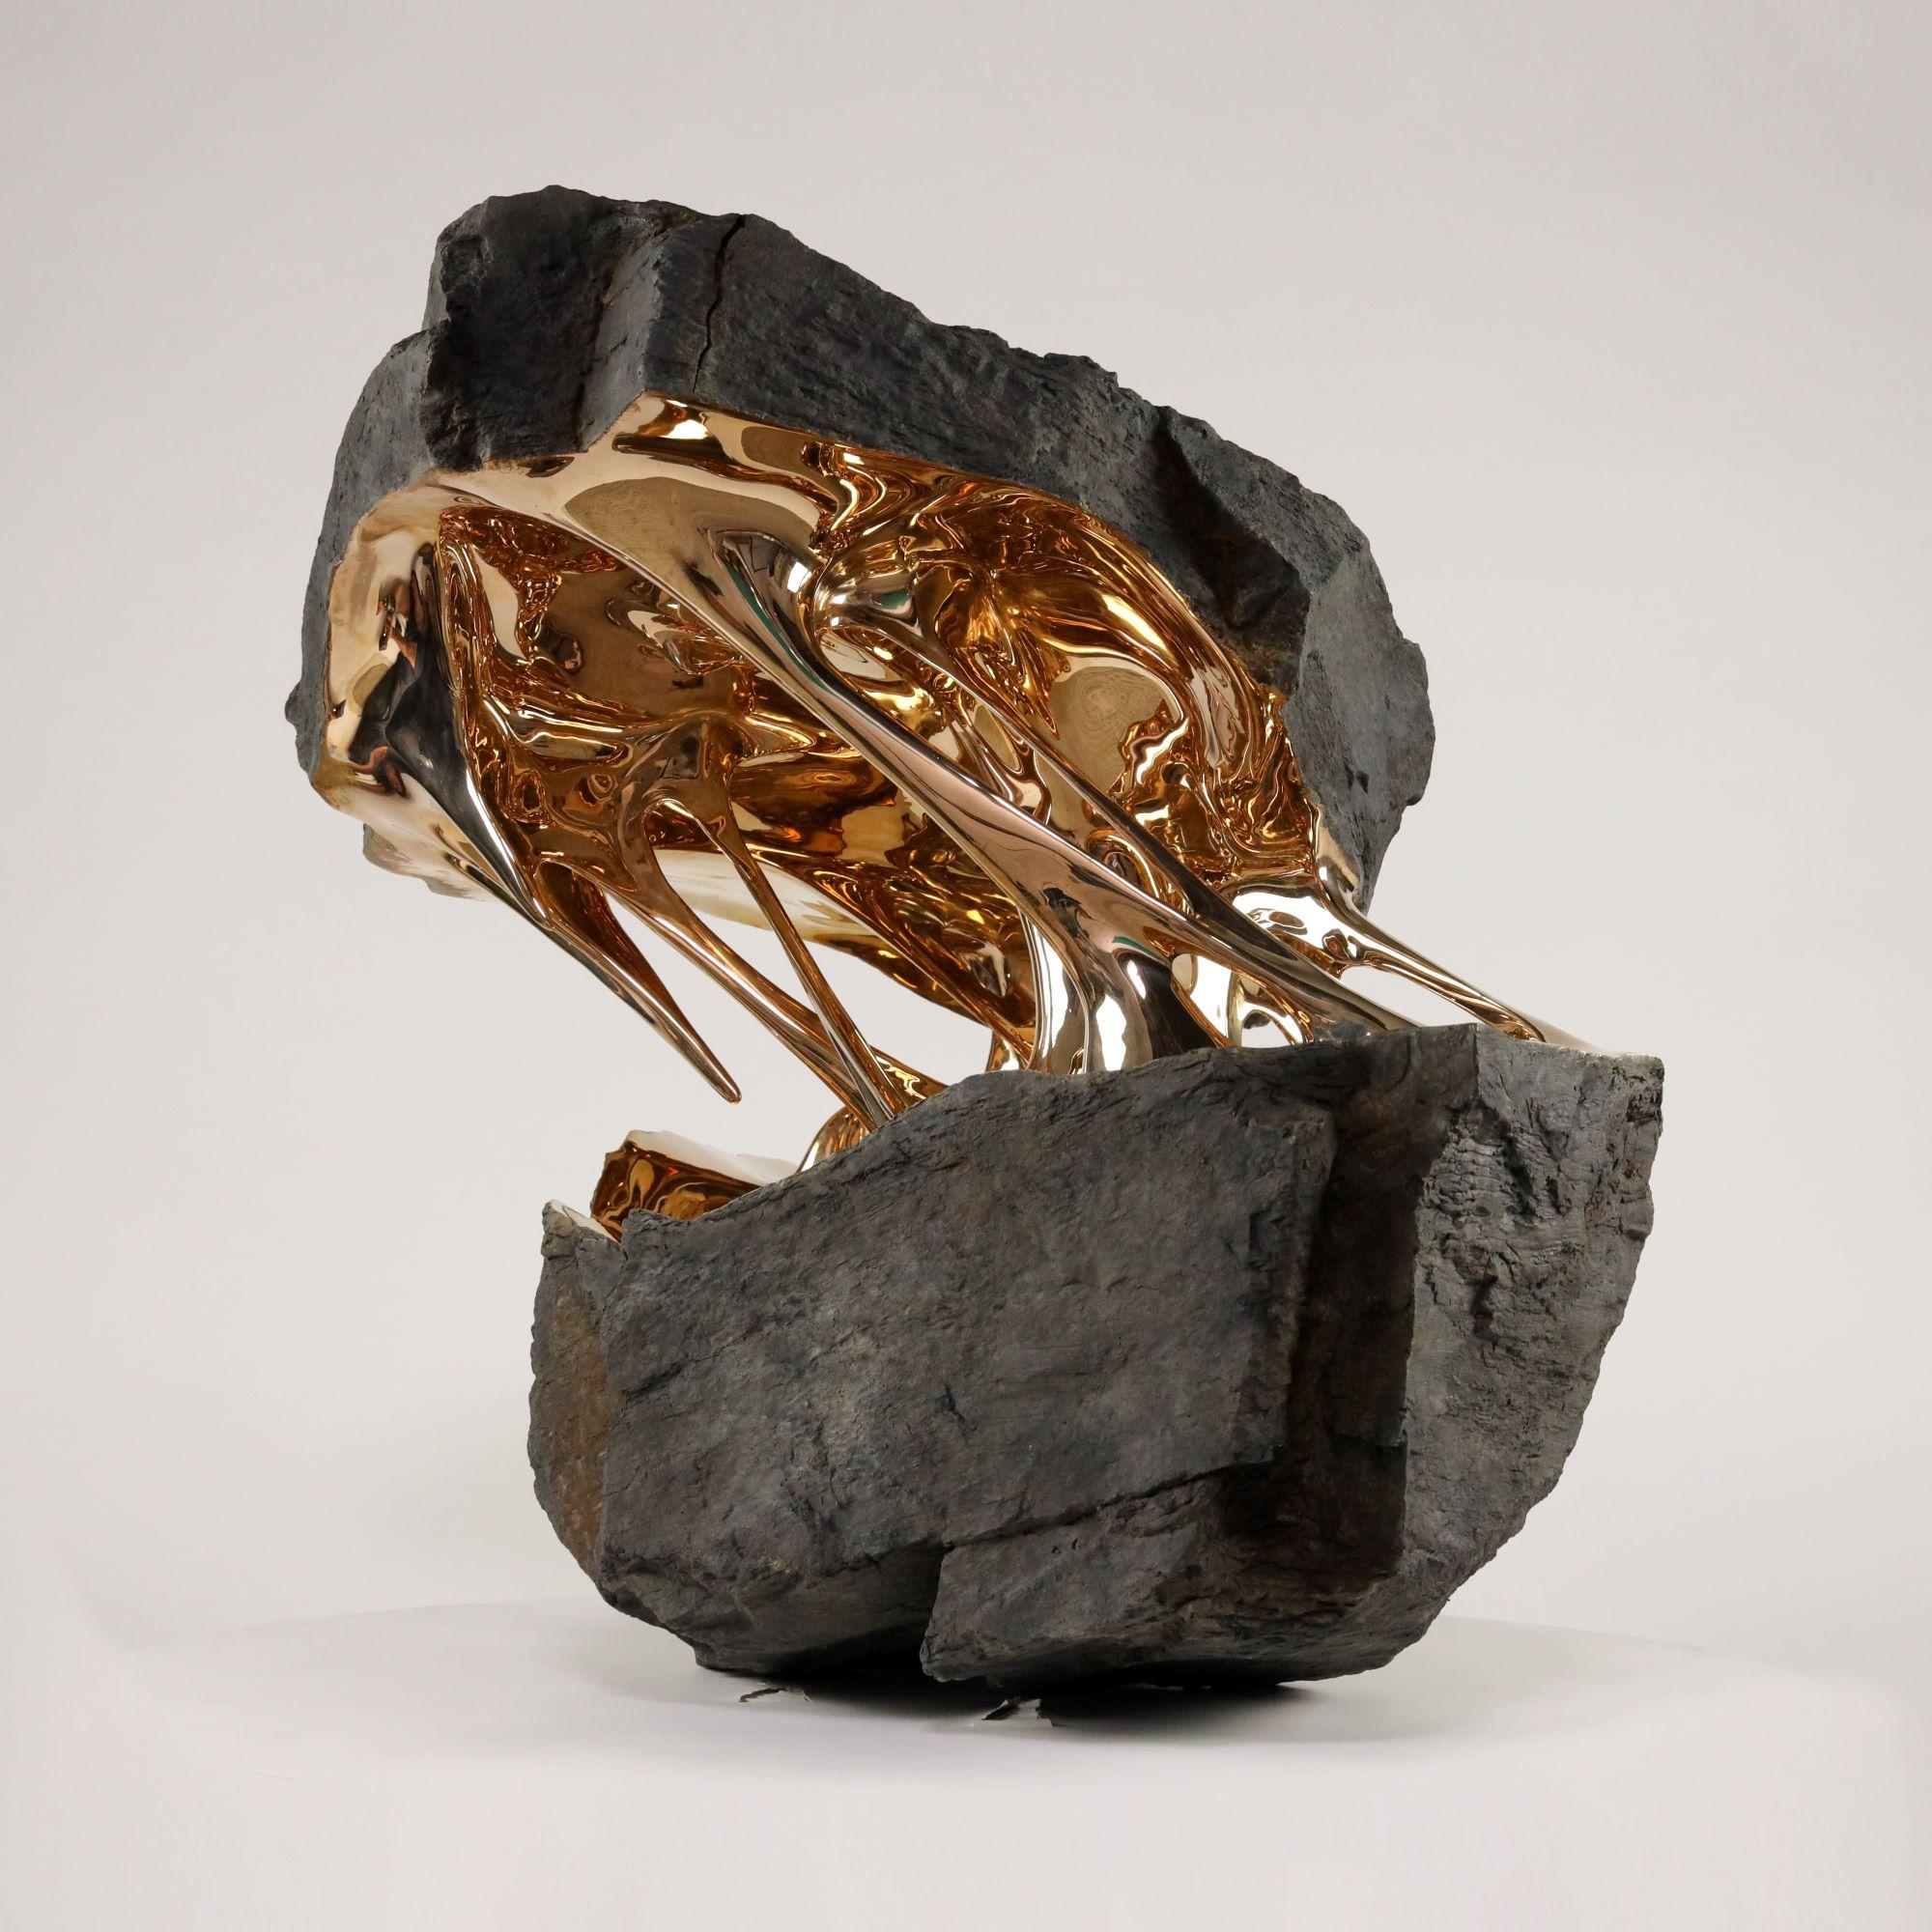 Gaïa by Romain Langlois - Rock-like bronze sculpture, golden, abstract For Sale 16